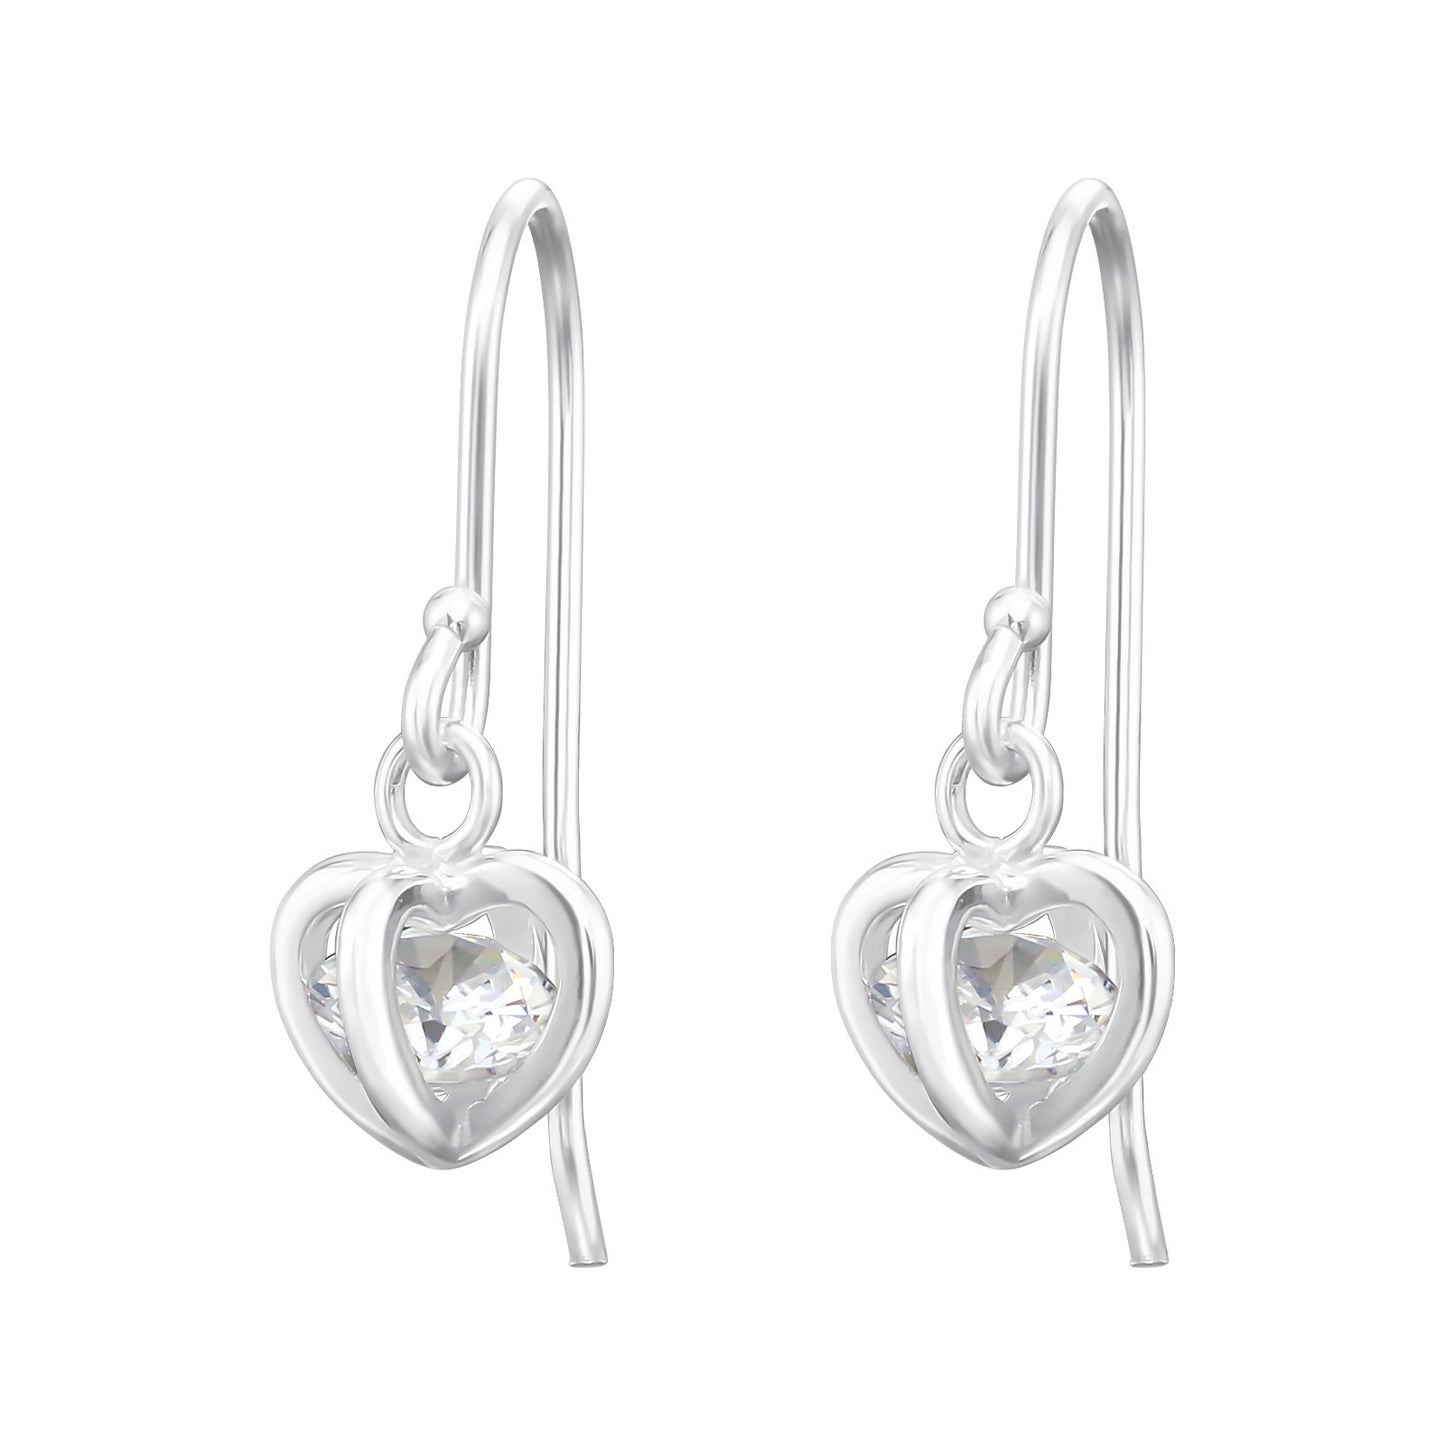 Cubic zirconia Crystal Heart Earring